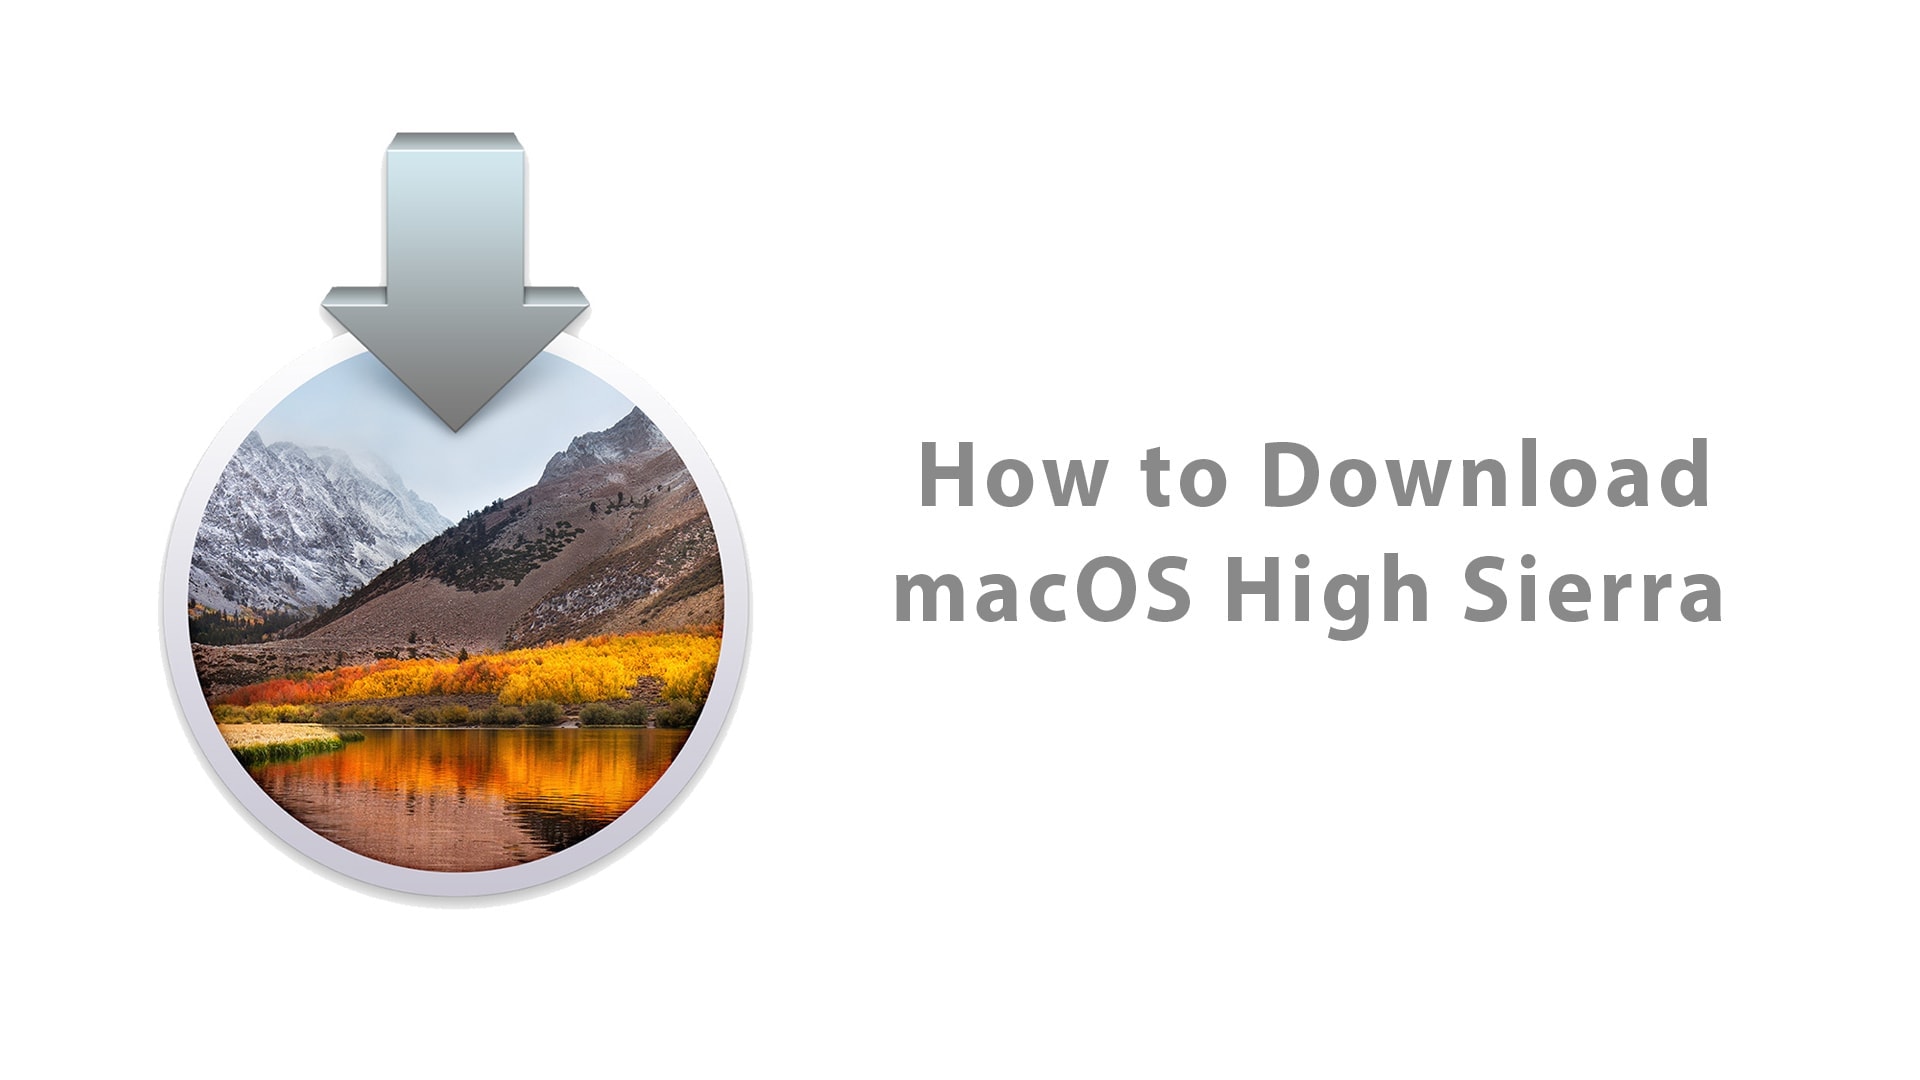 macos high sierra download location